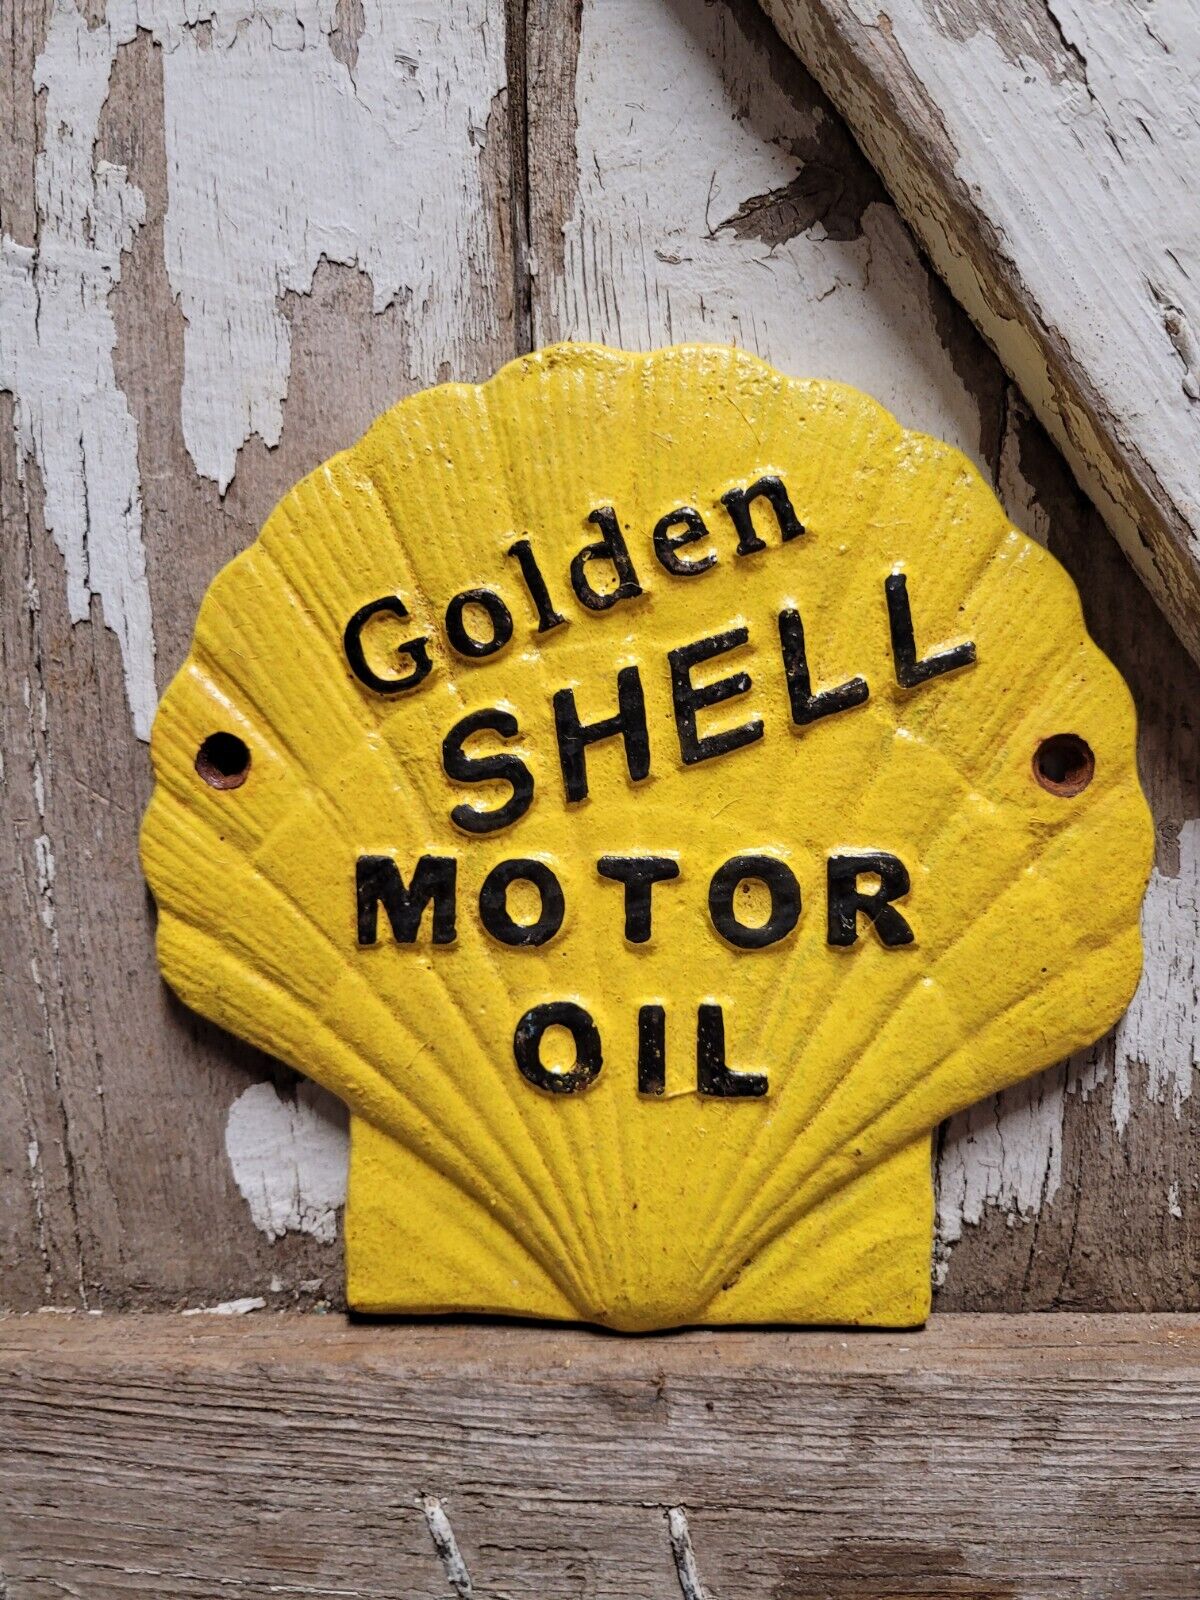 VINTAGE GOLDEN SHELL MOTOR OIL SIGN CAST IRON METAL ADVERTISING GAS STATION OIL